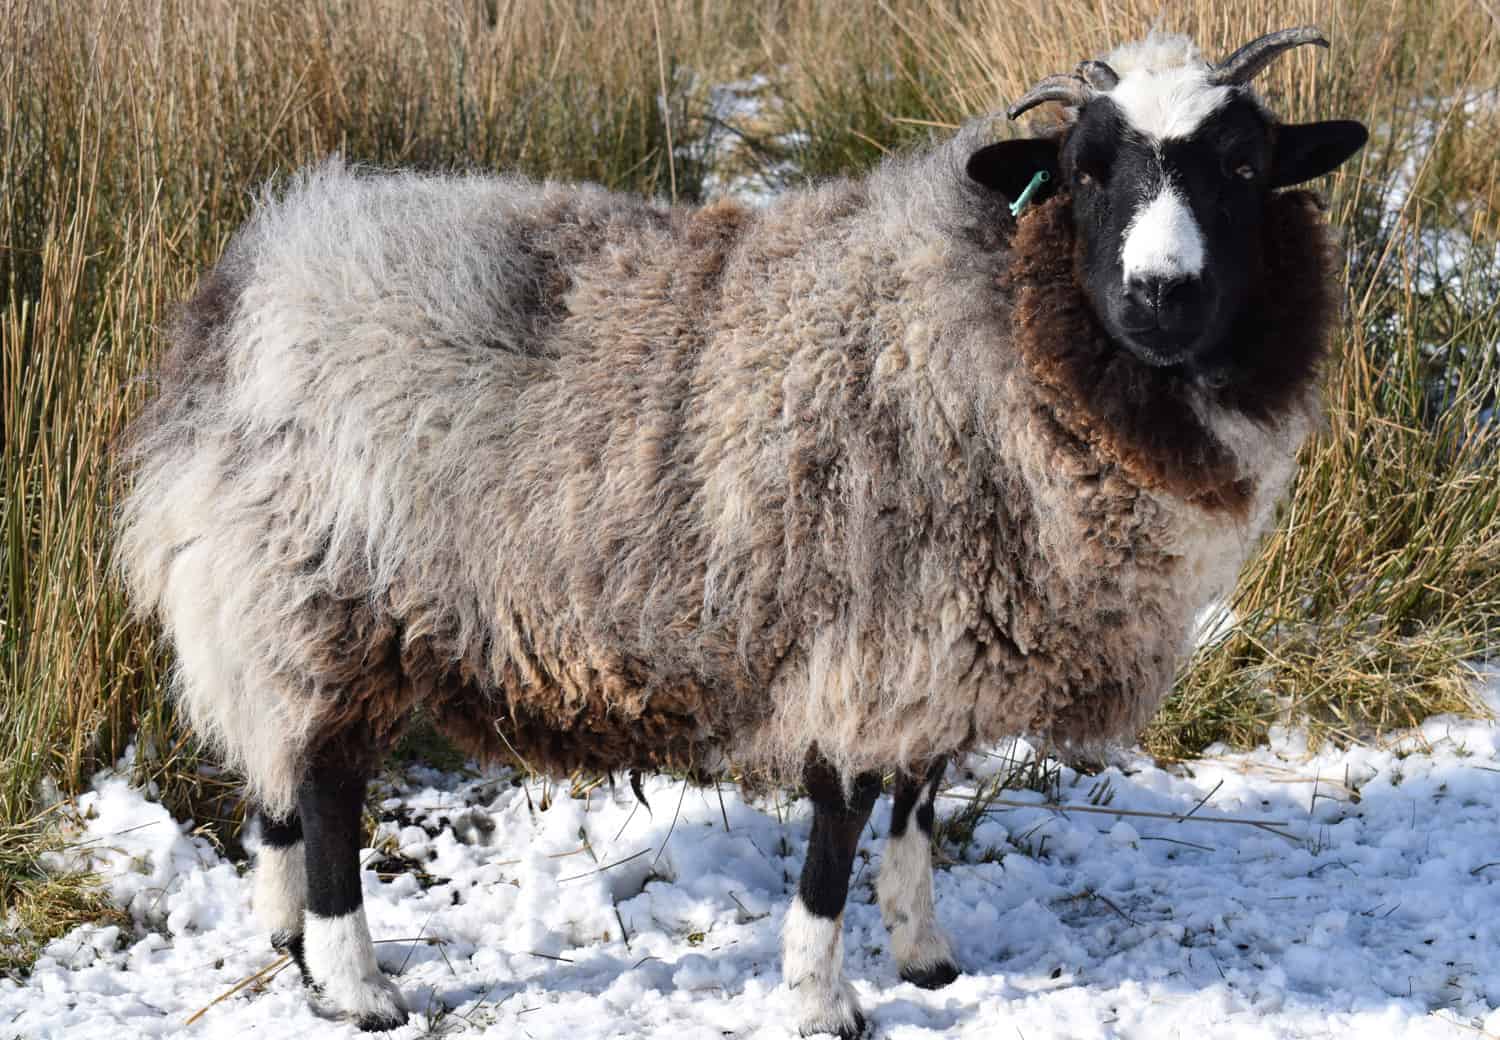 Holly snow pet lamb sheep jacob cross shetland spotted black grey white wales gwynedd british wool gifts homeware